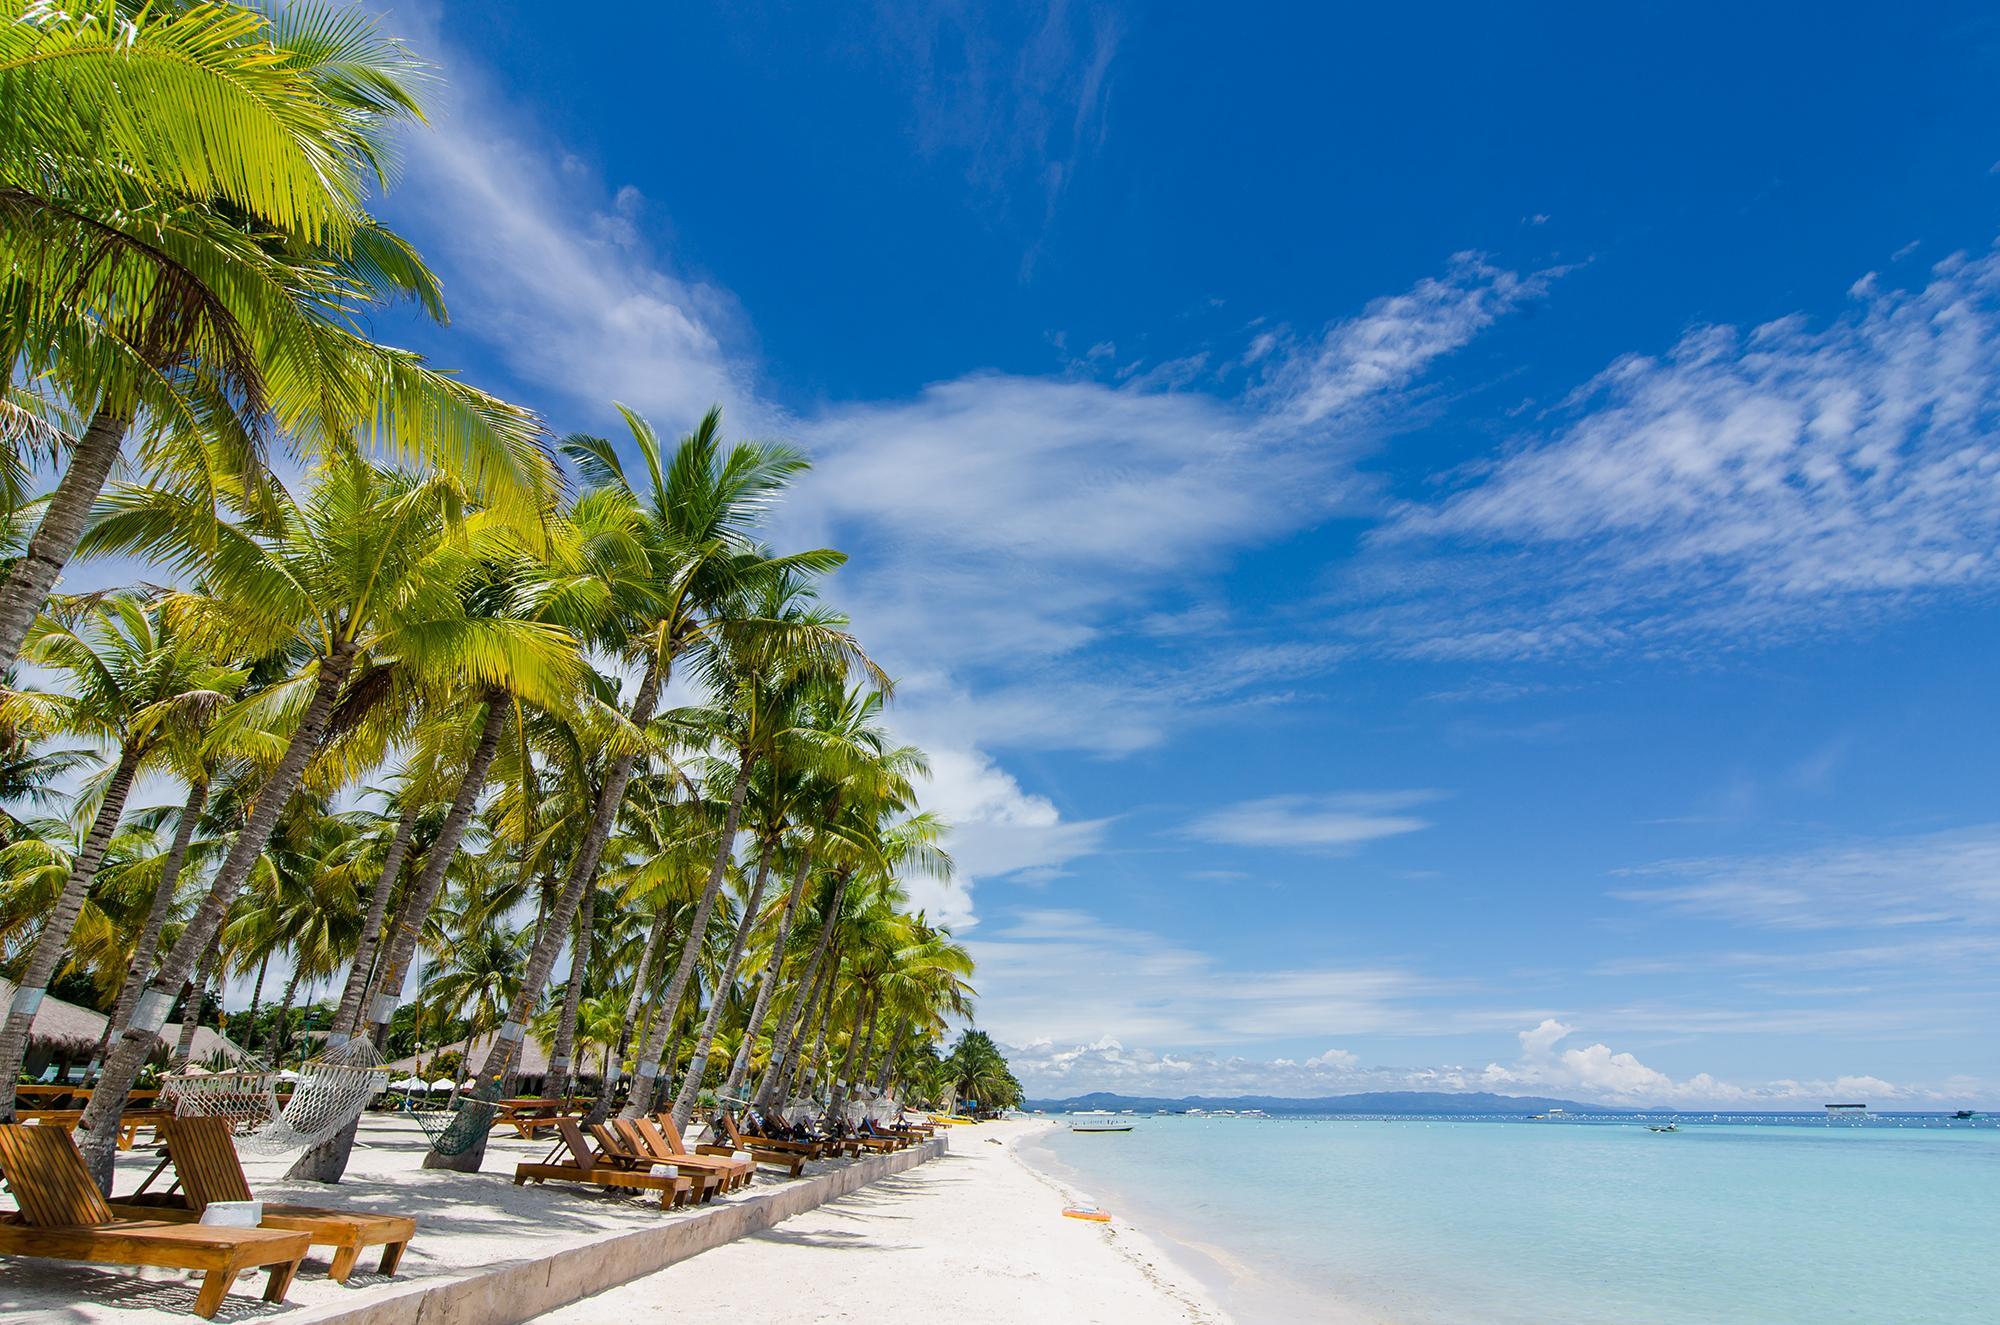 Bohol Beach Club Resort in Panglao Island, Bohol, Philippines